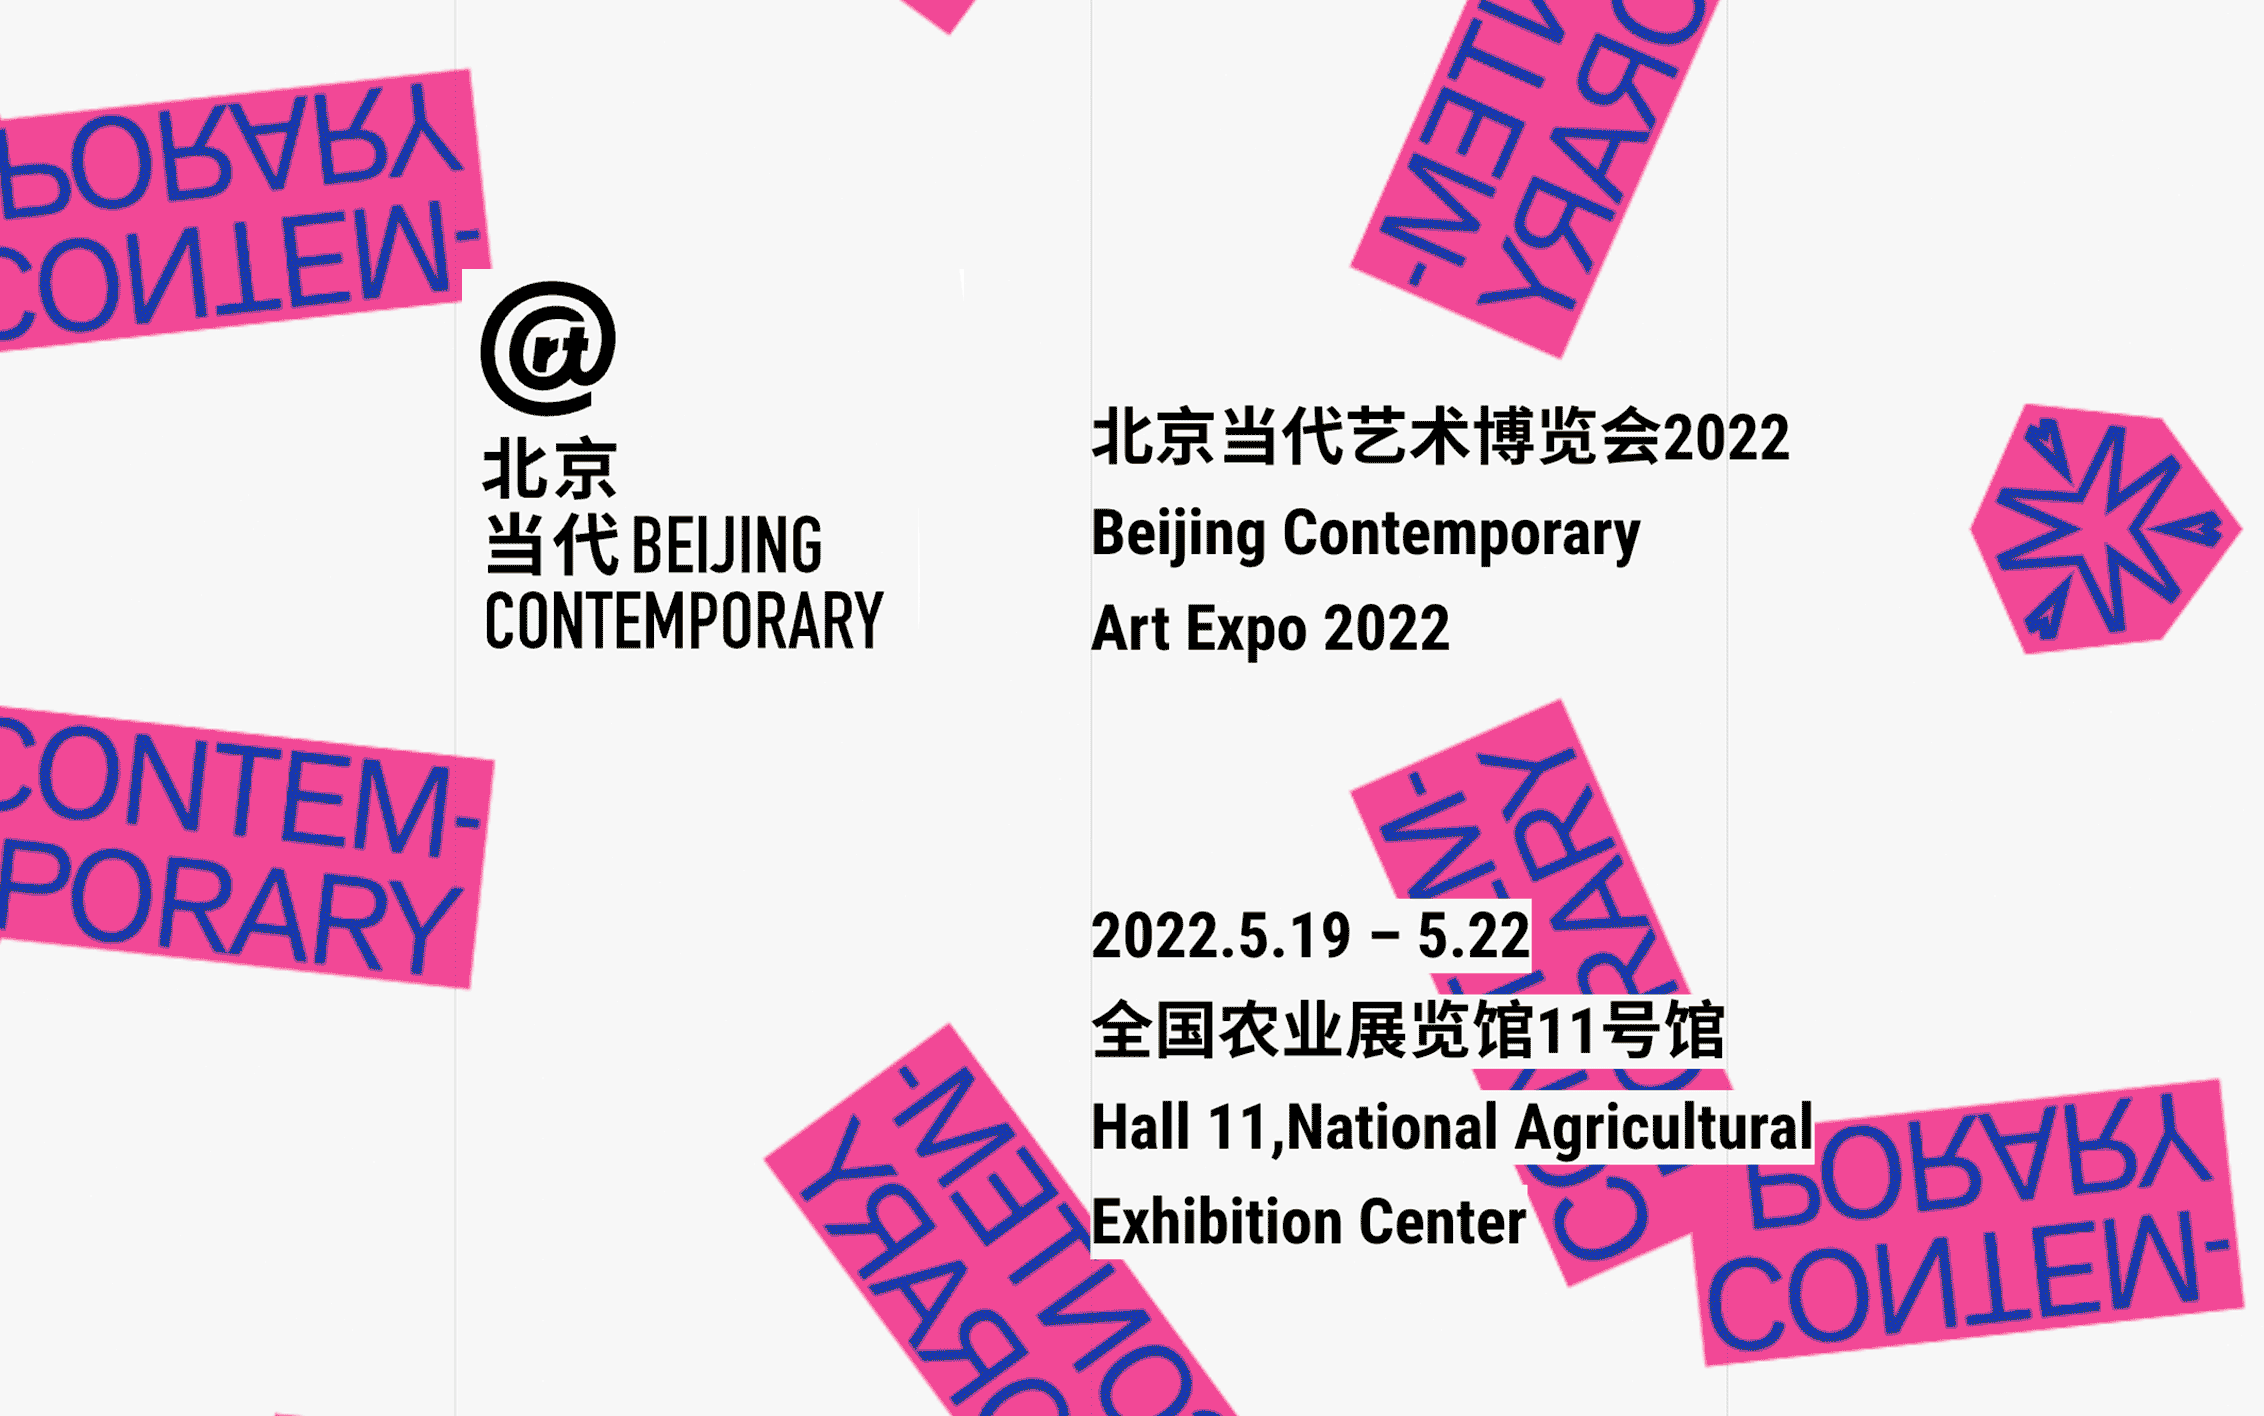 Contemporary art art fair, Beijing Contemporary Art Expo 2022 at Capsule Shanghai, China